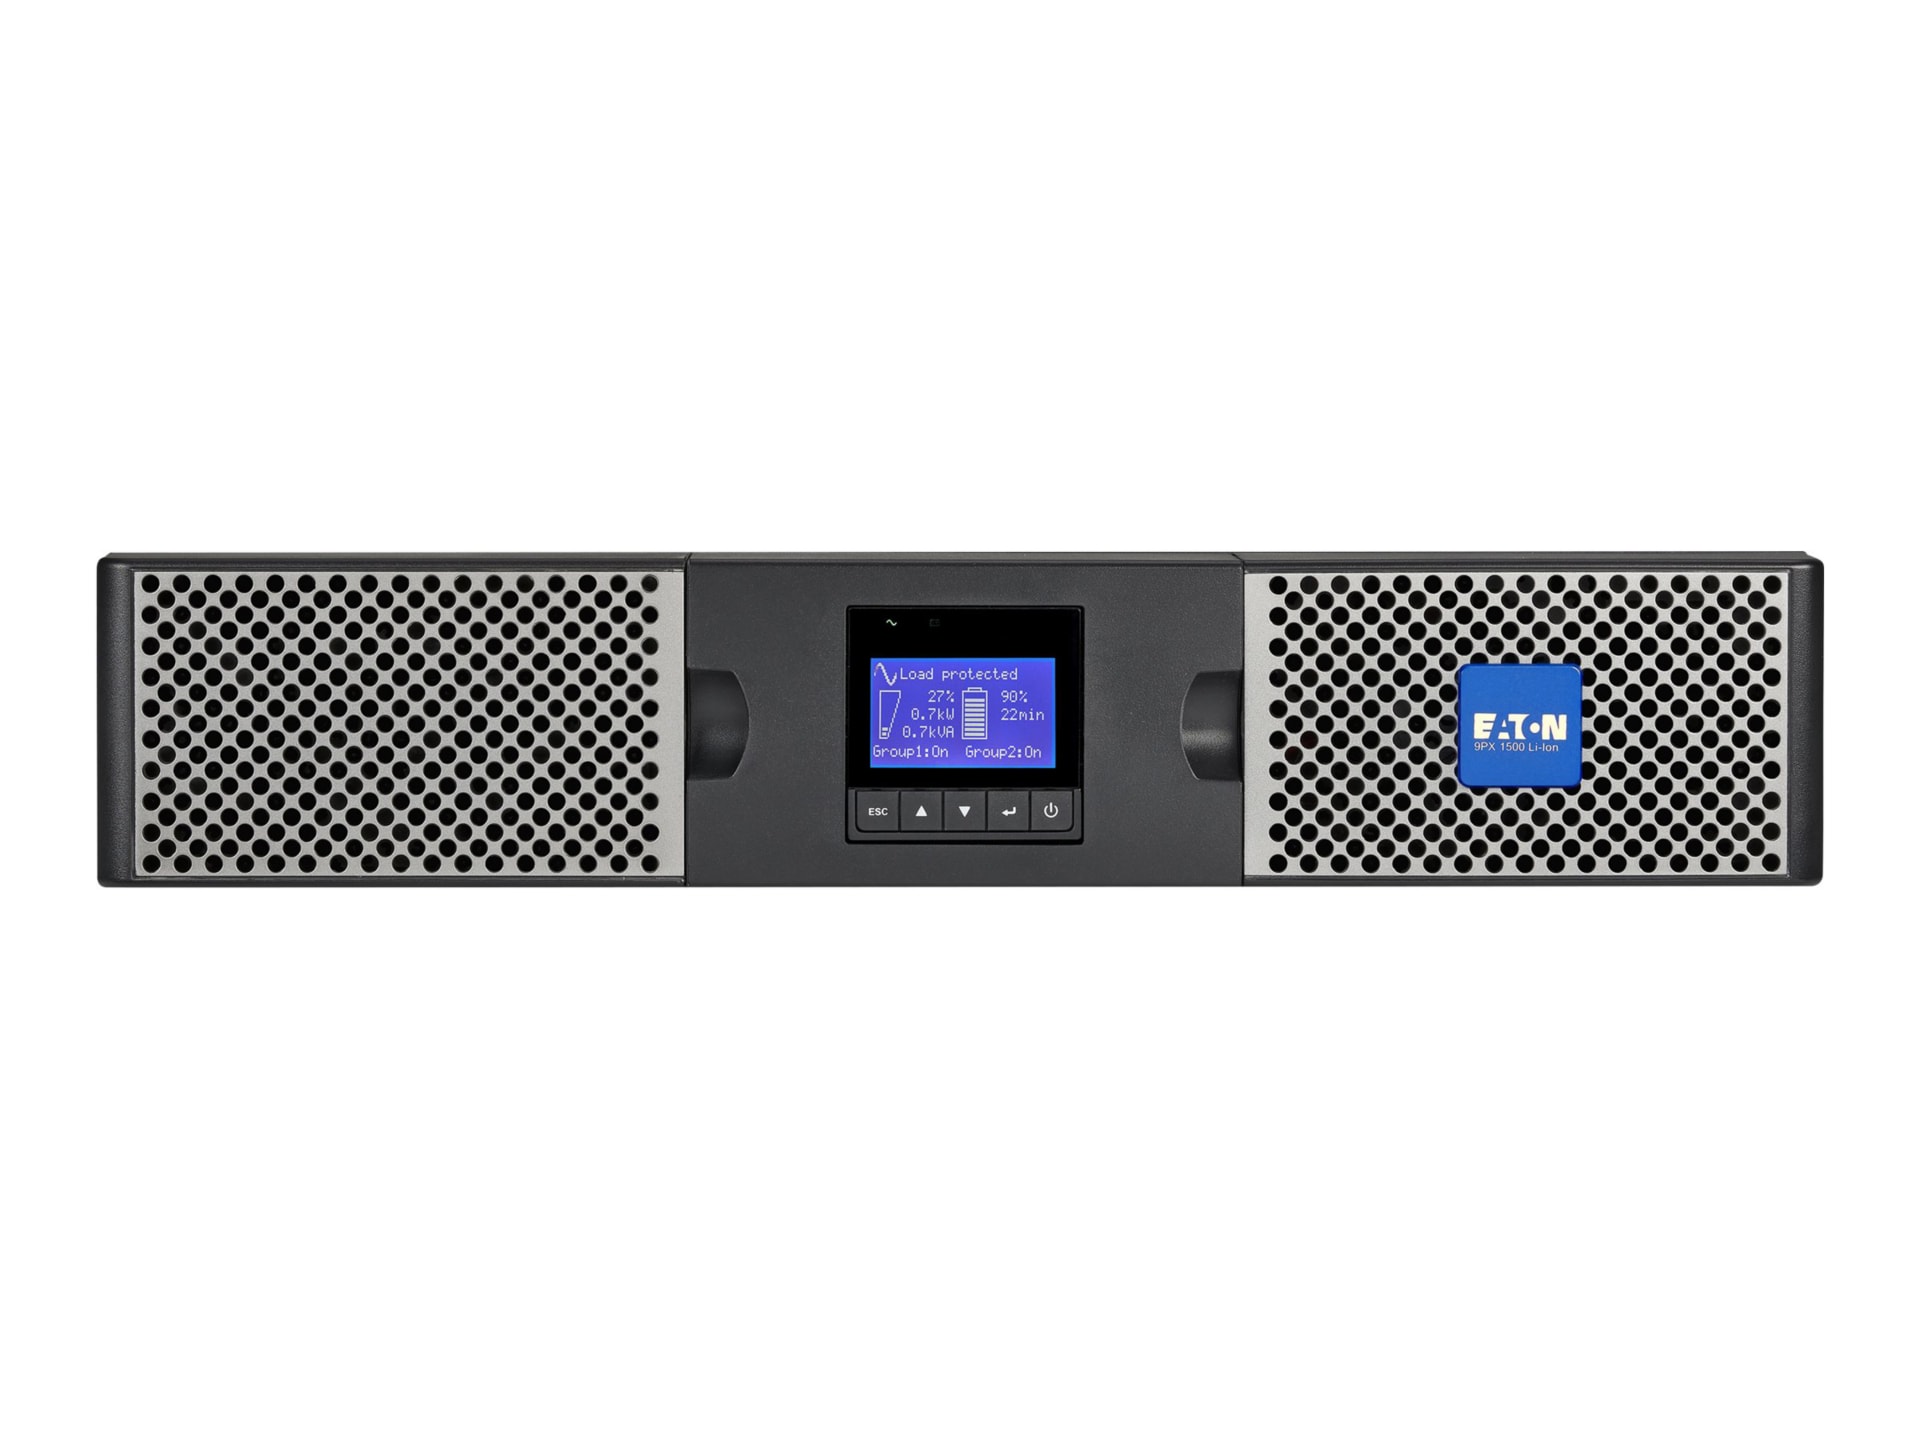 Eaton 9PX Lithium-Ion UPS 1500VA 1350W 120V 2U Rack/Tower Net Card Included